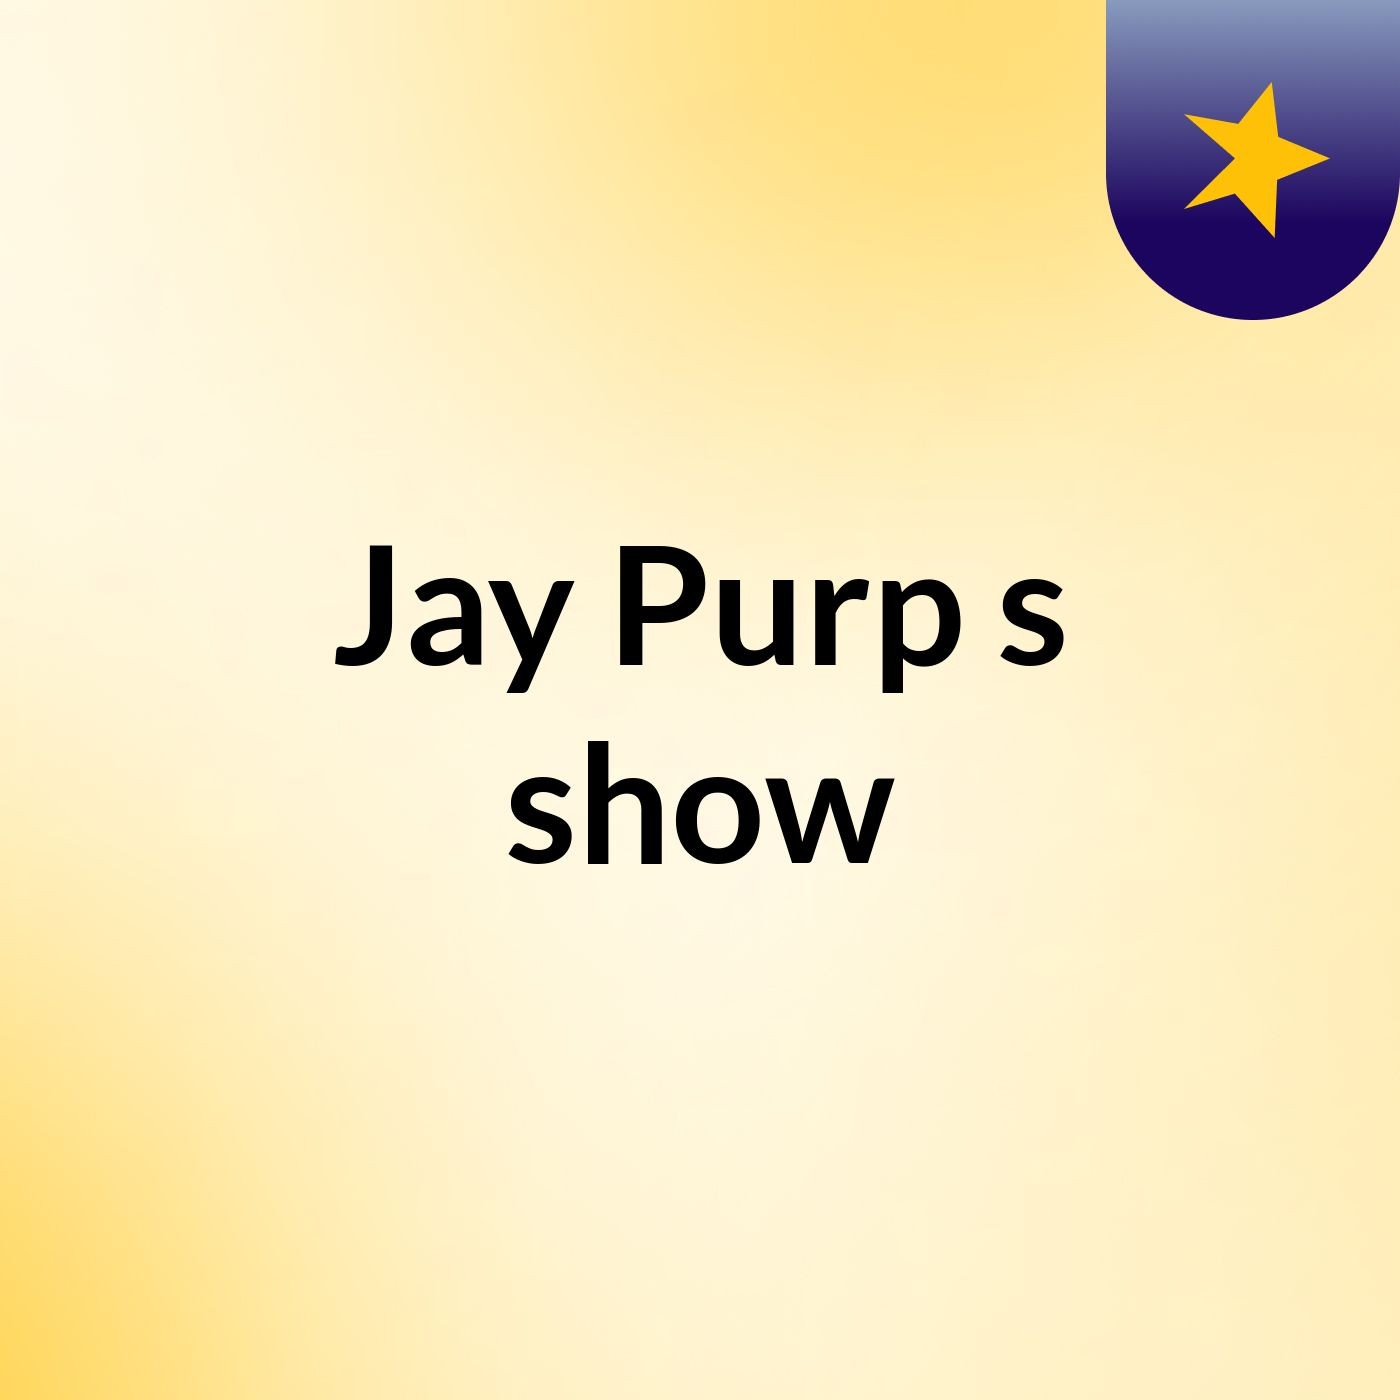 Jay Purp's show